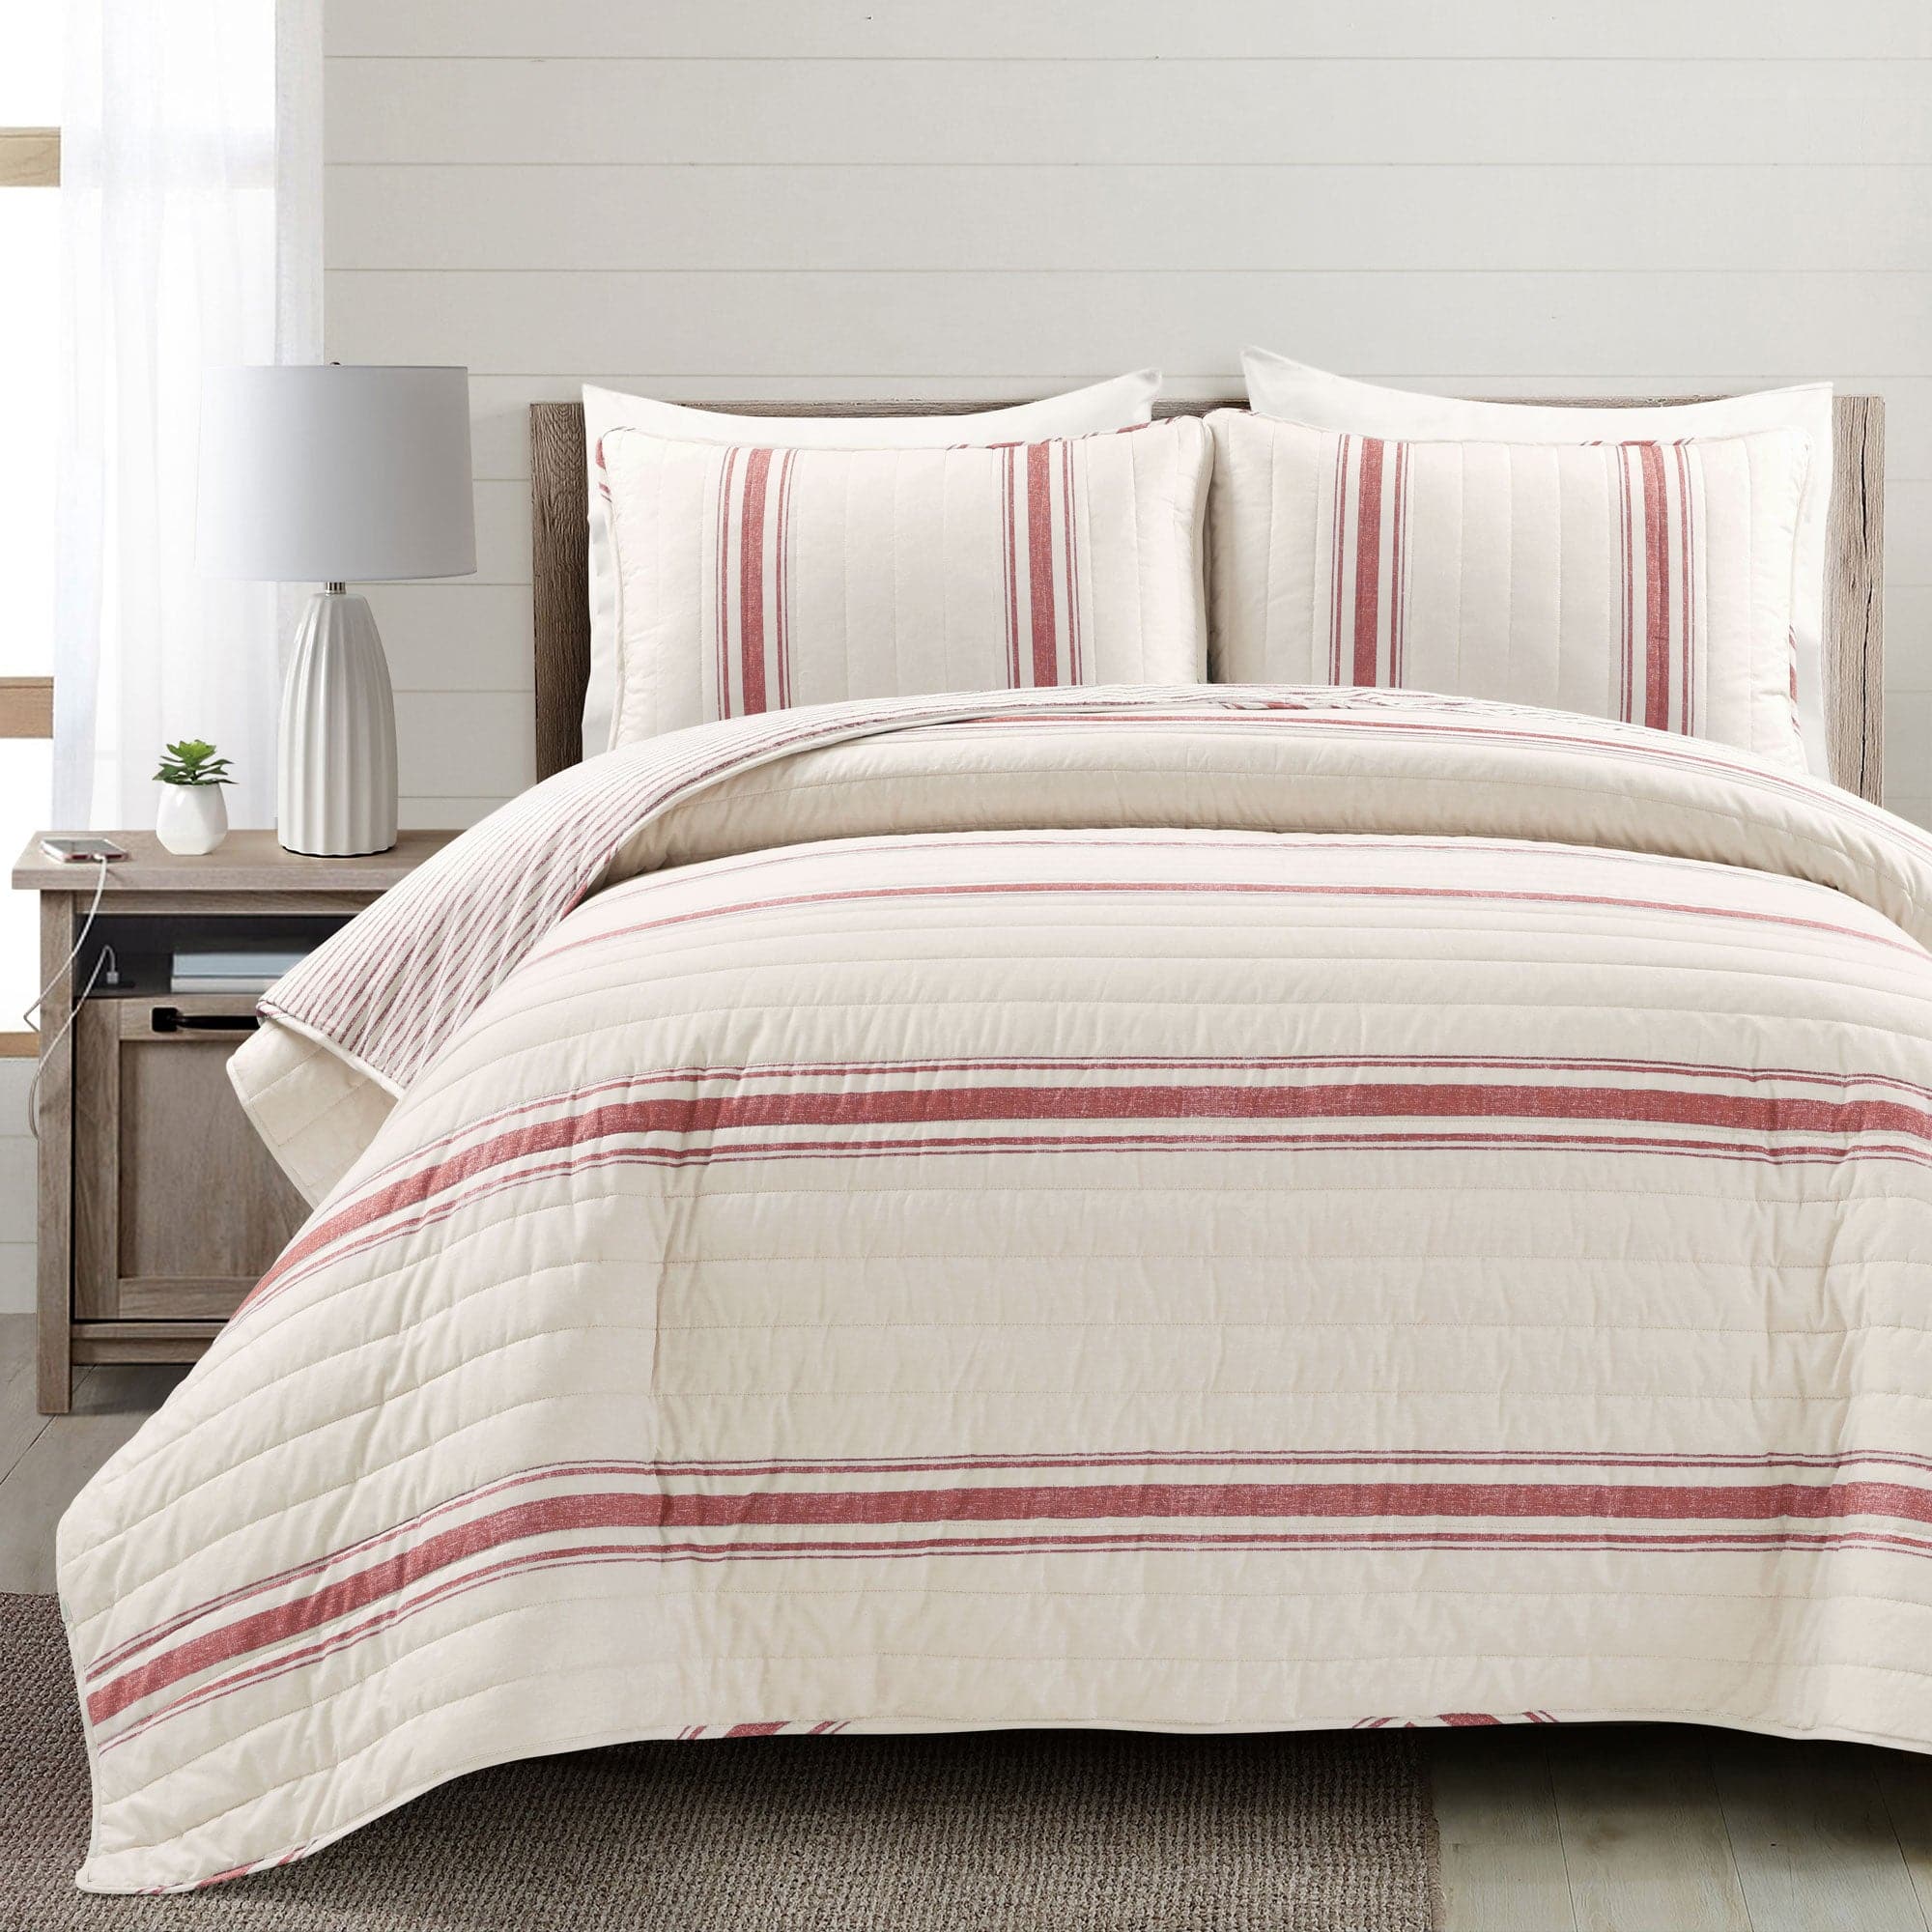 Lush Decor Farmhouse Stripe Comforter Red Set Full/Queen